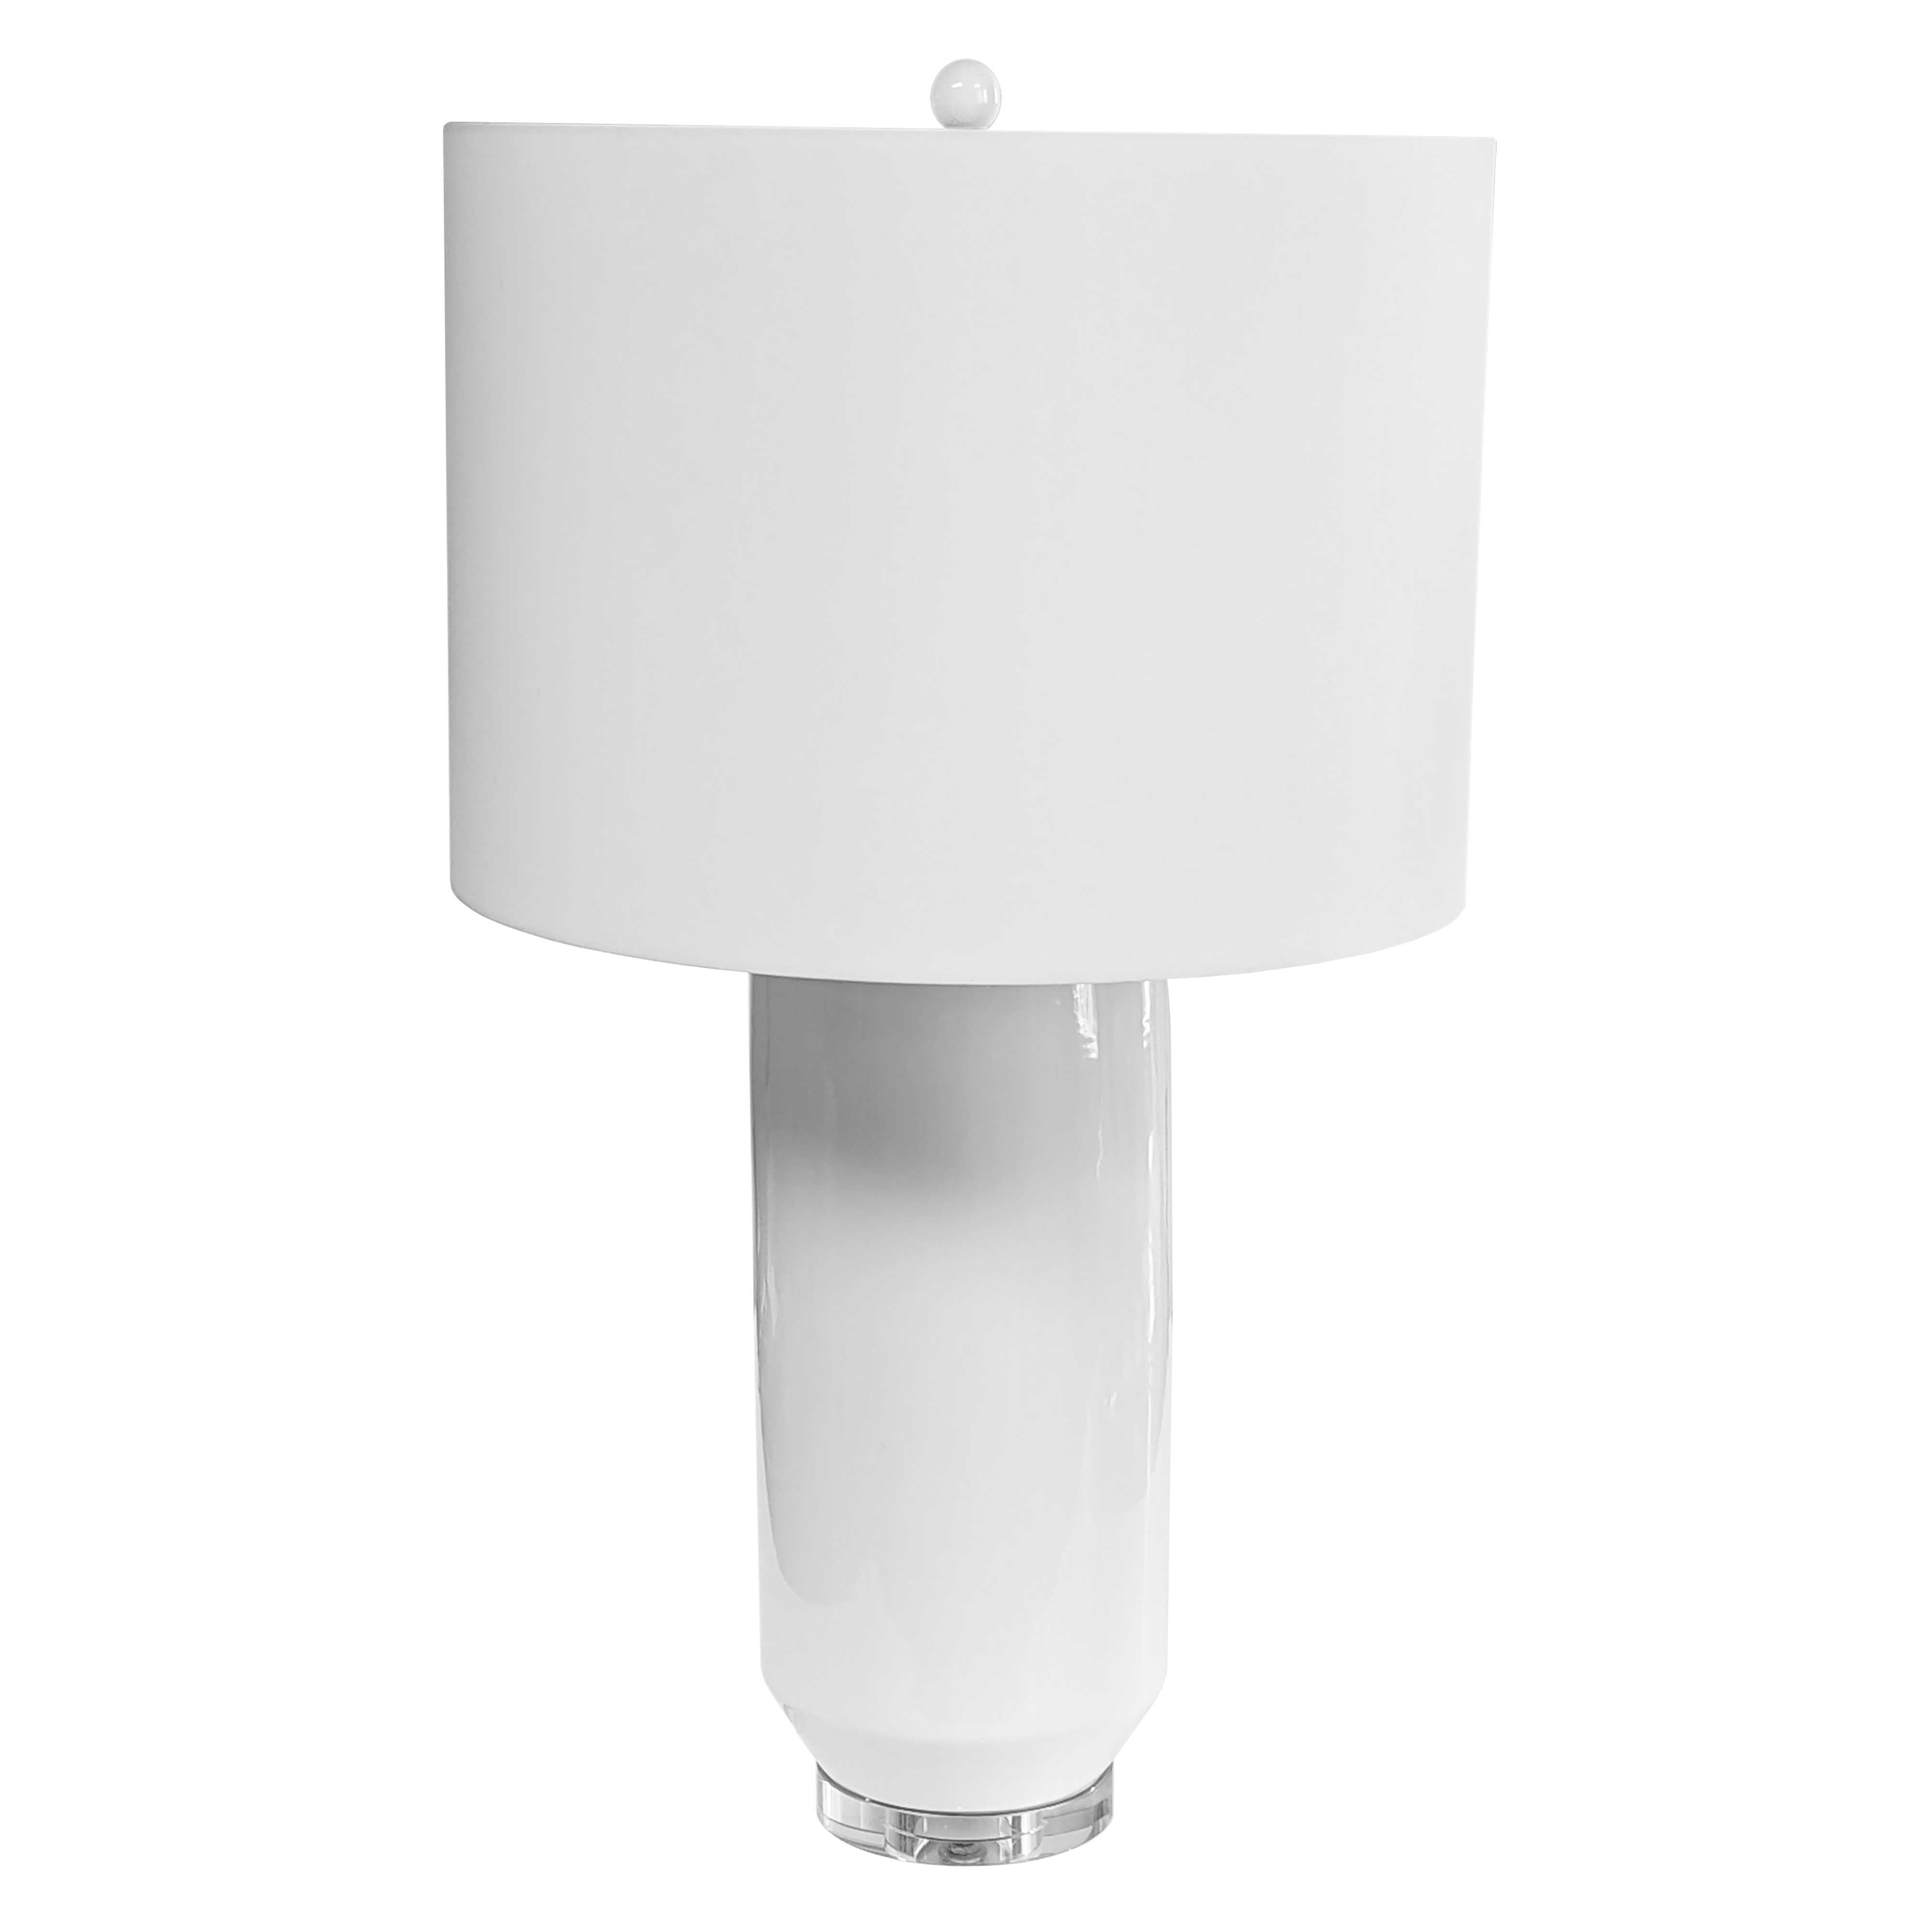 GOLIATH Table lamp White - GOL-301T-WH | DAINOLITE